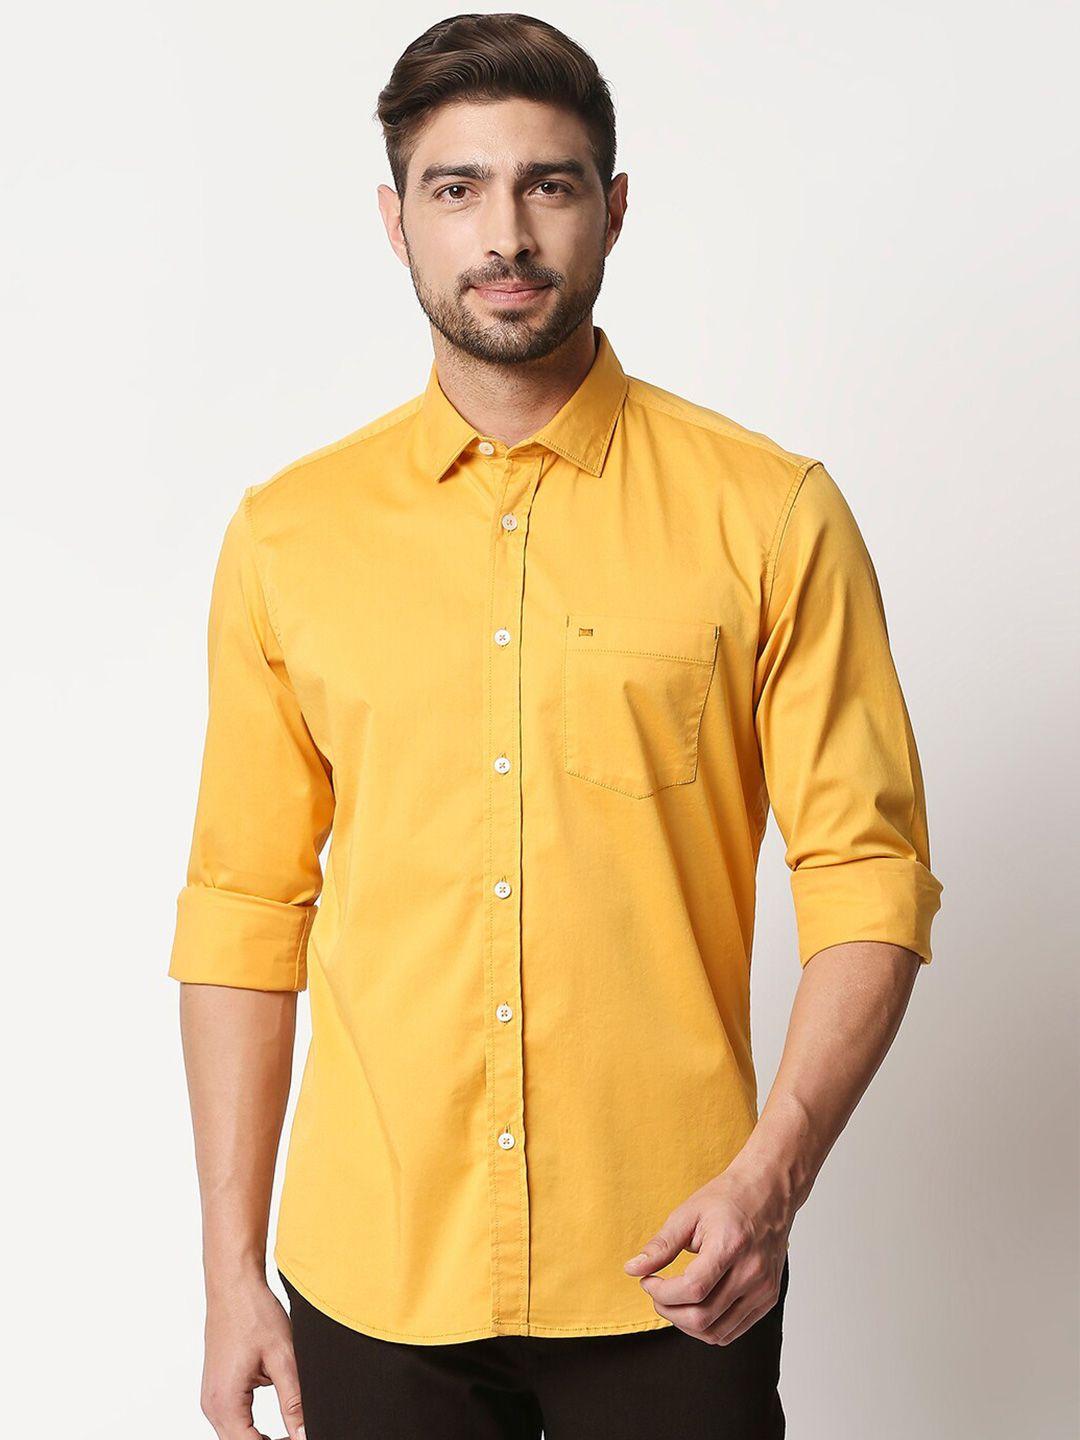 basics men mustard yellow solid slim fit casual shirt